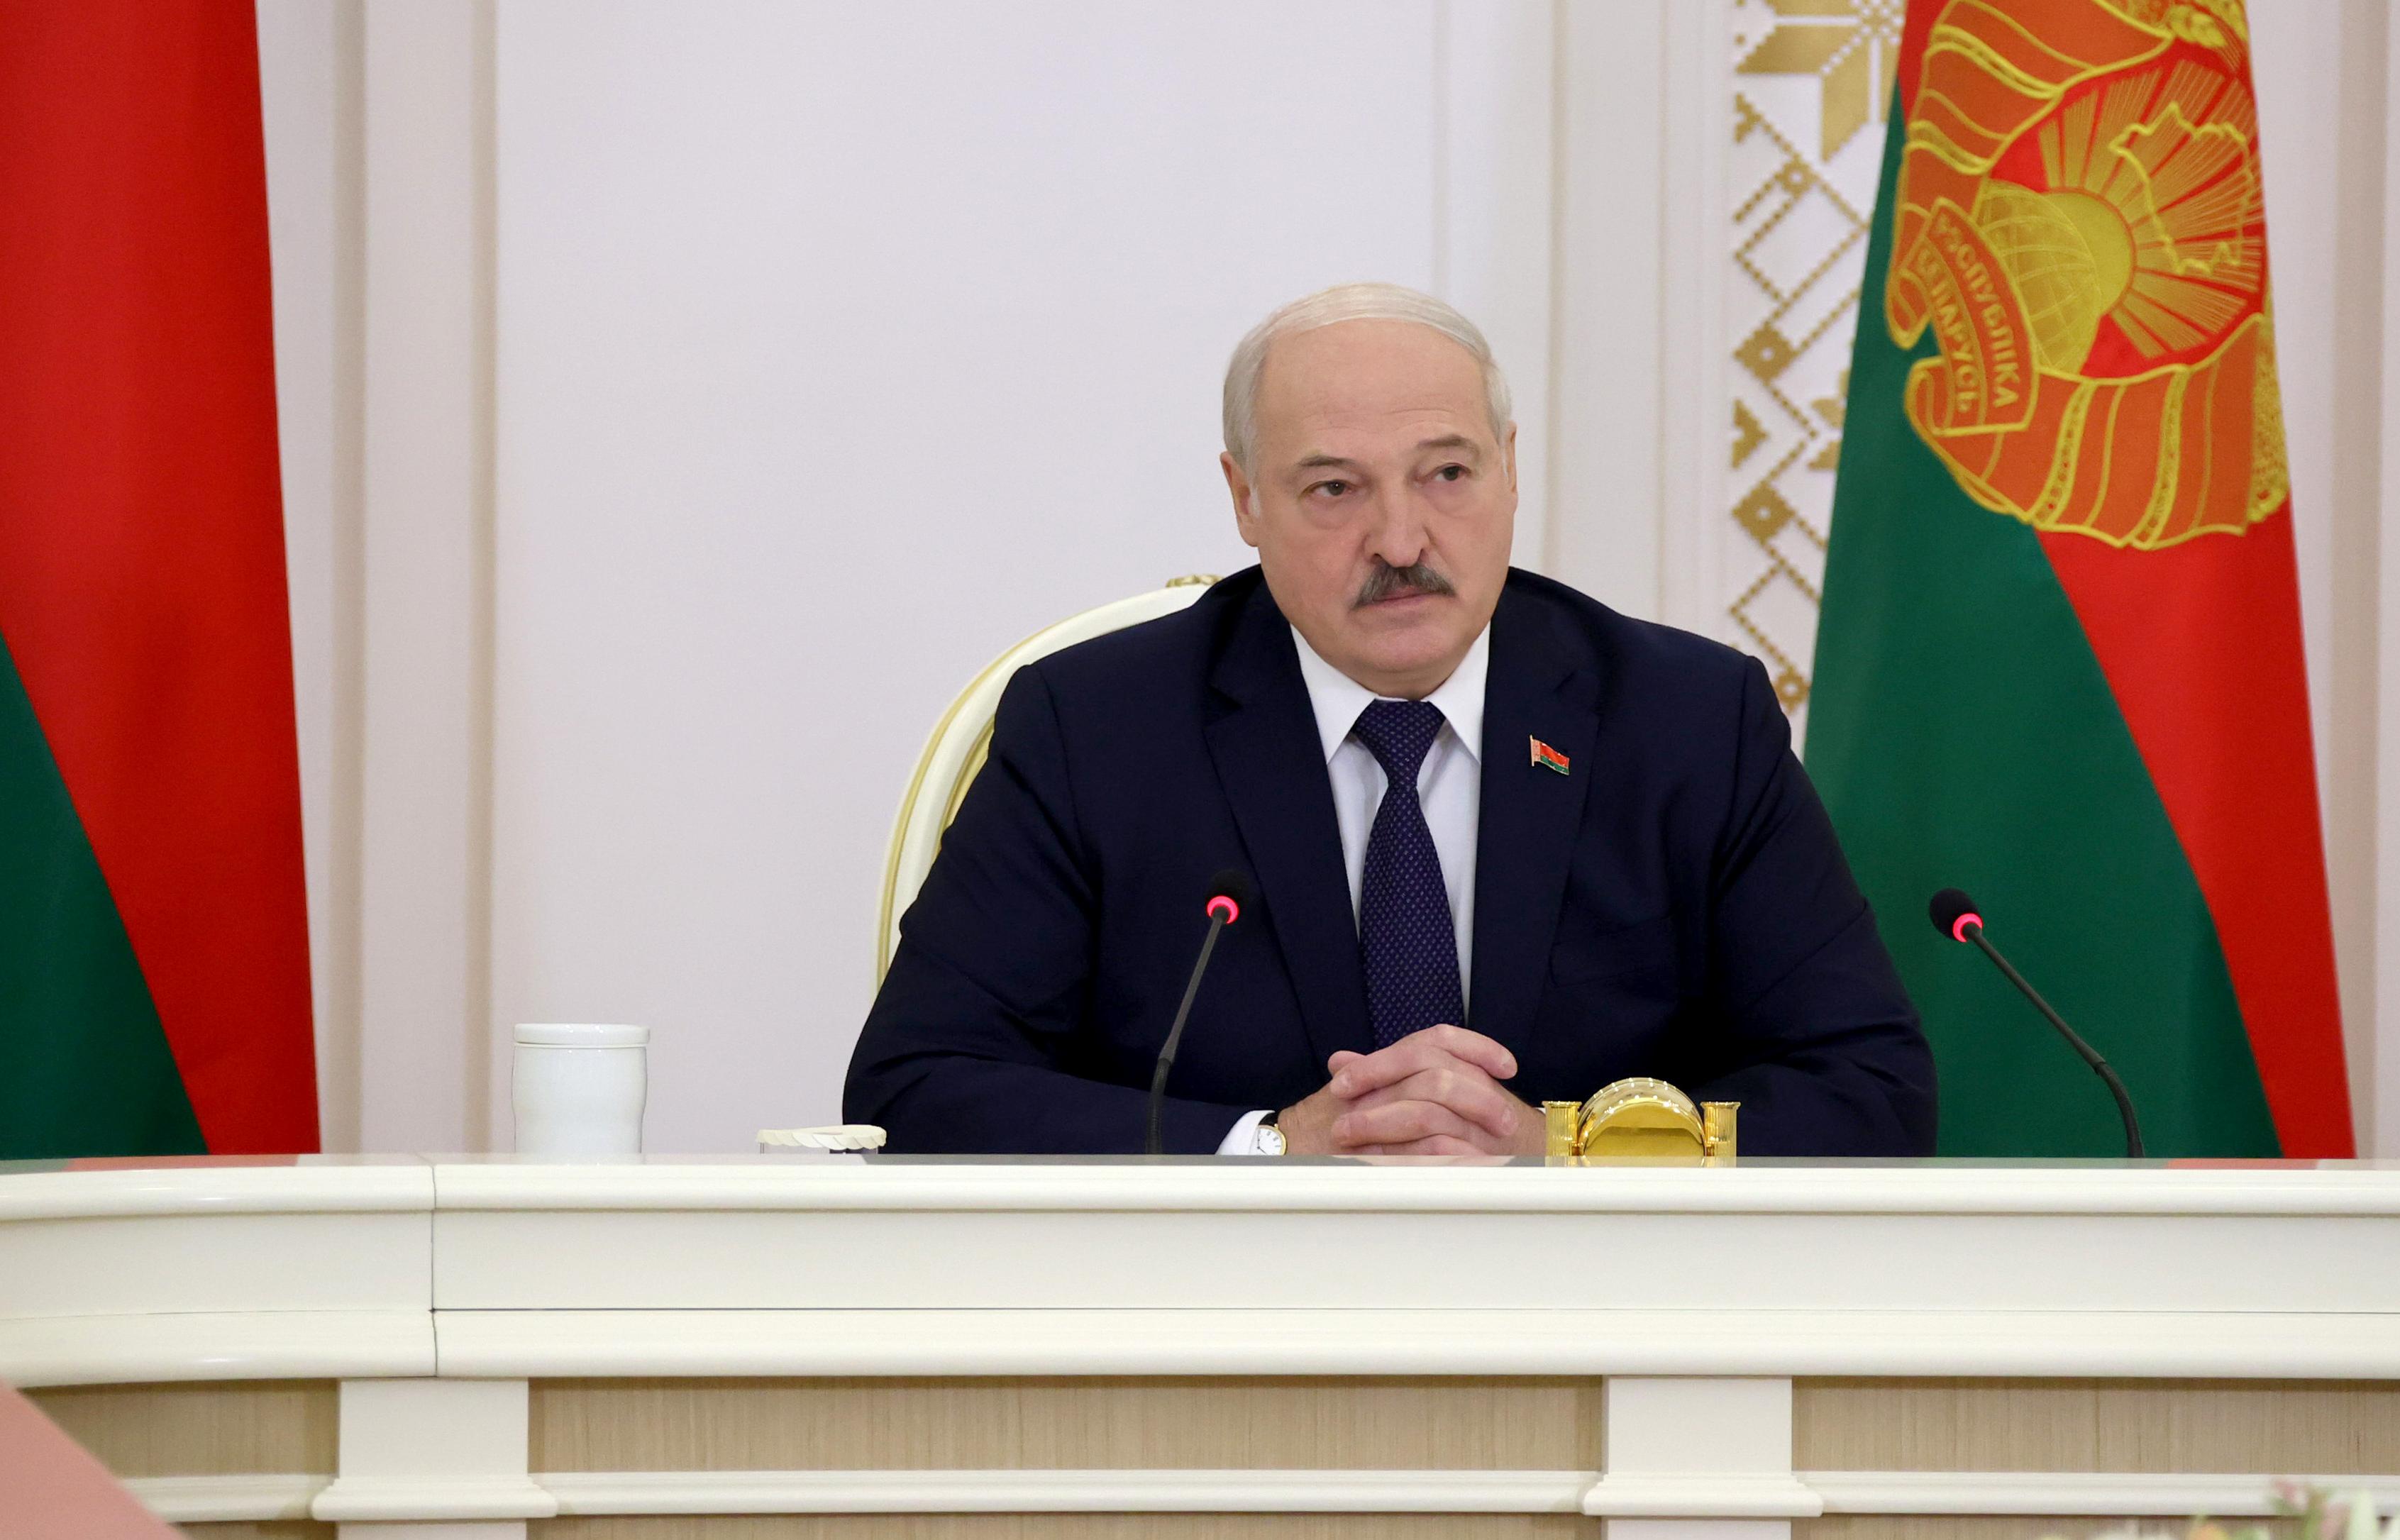 Александр Лукашенко: вся наша страна впряглась, закатав рукава, и выдала достойный результат 